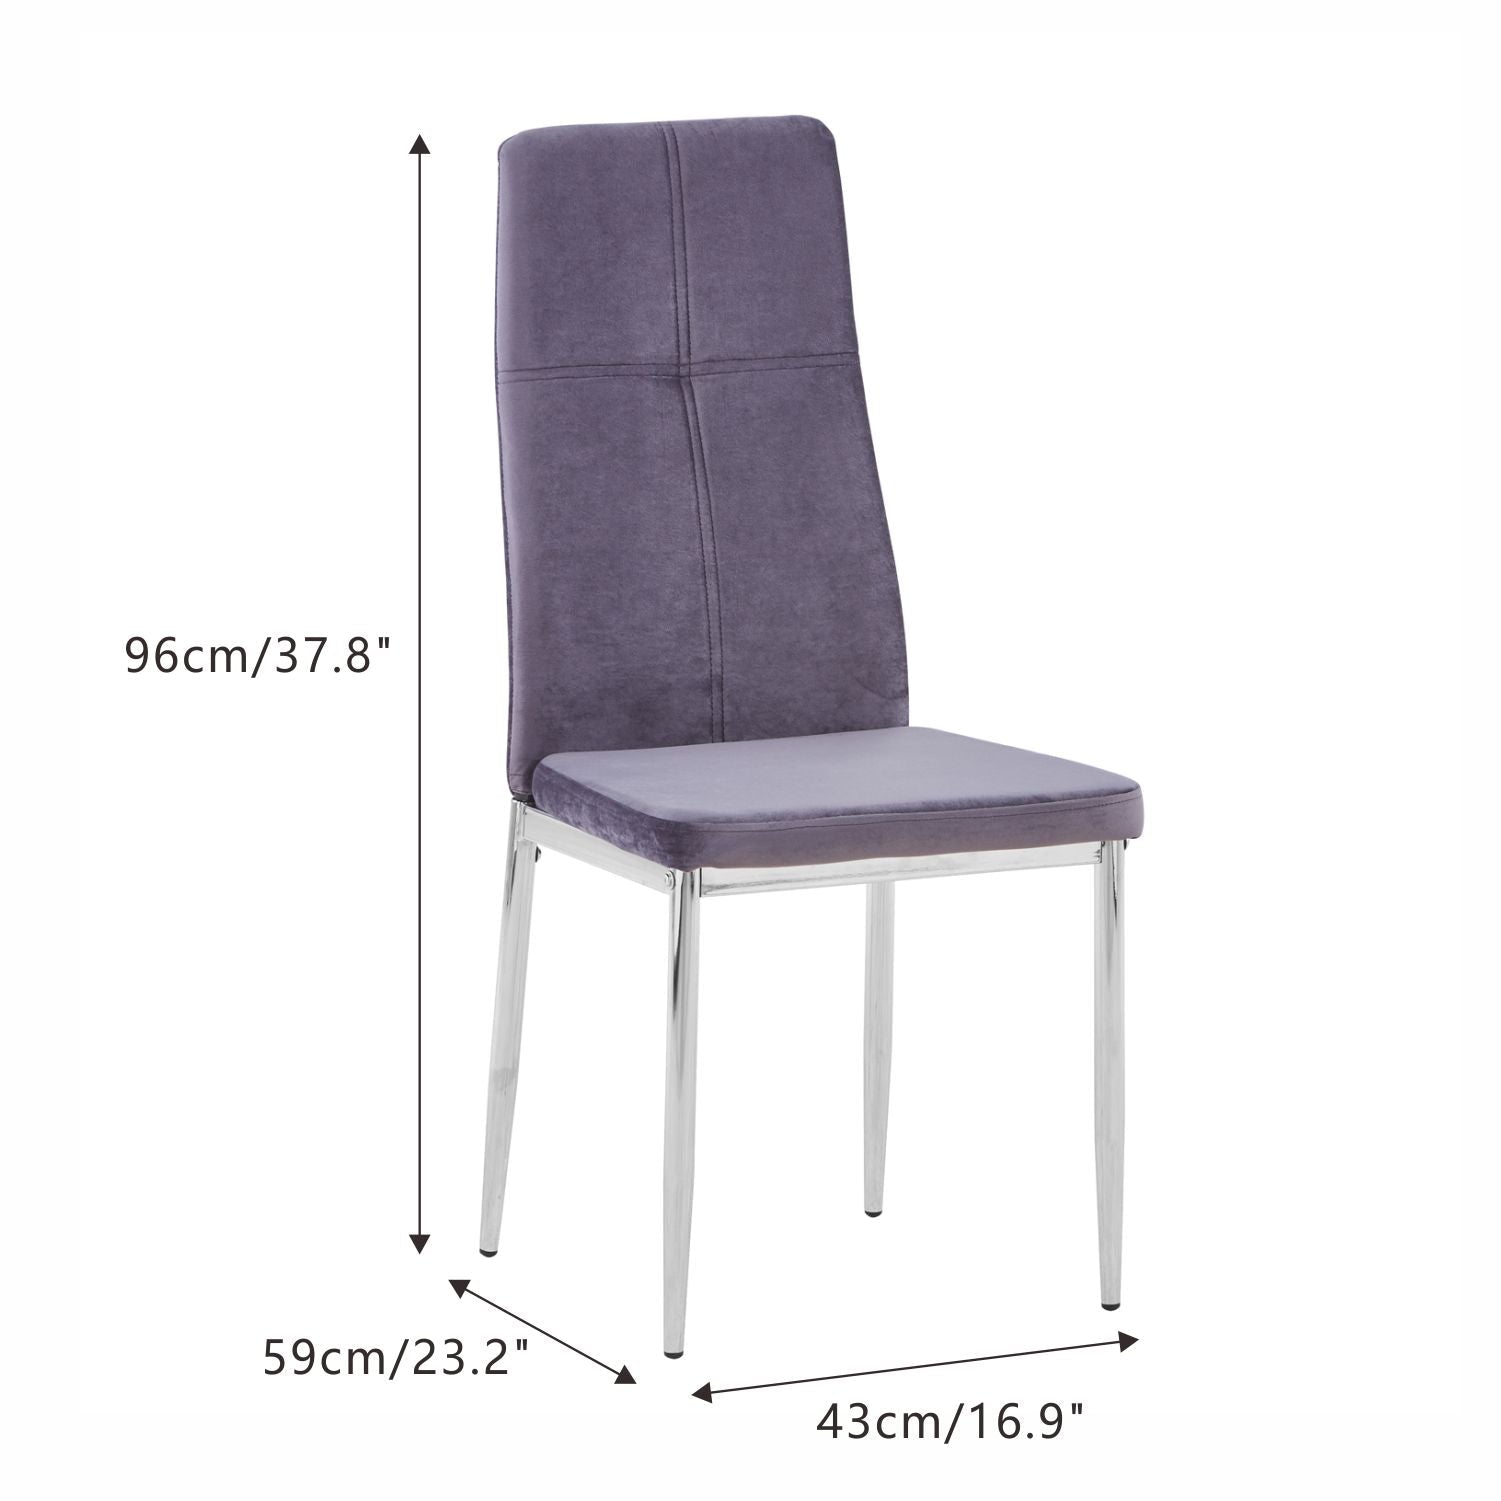 Grey UKFR Velvet Dining Chairs With Chromed Legs_2